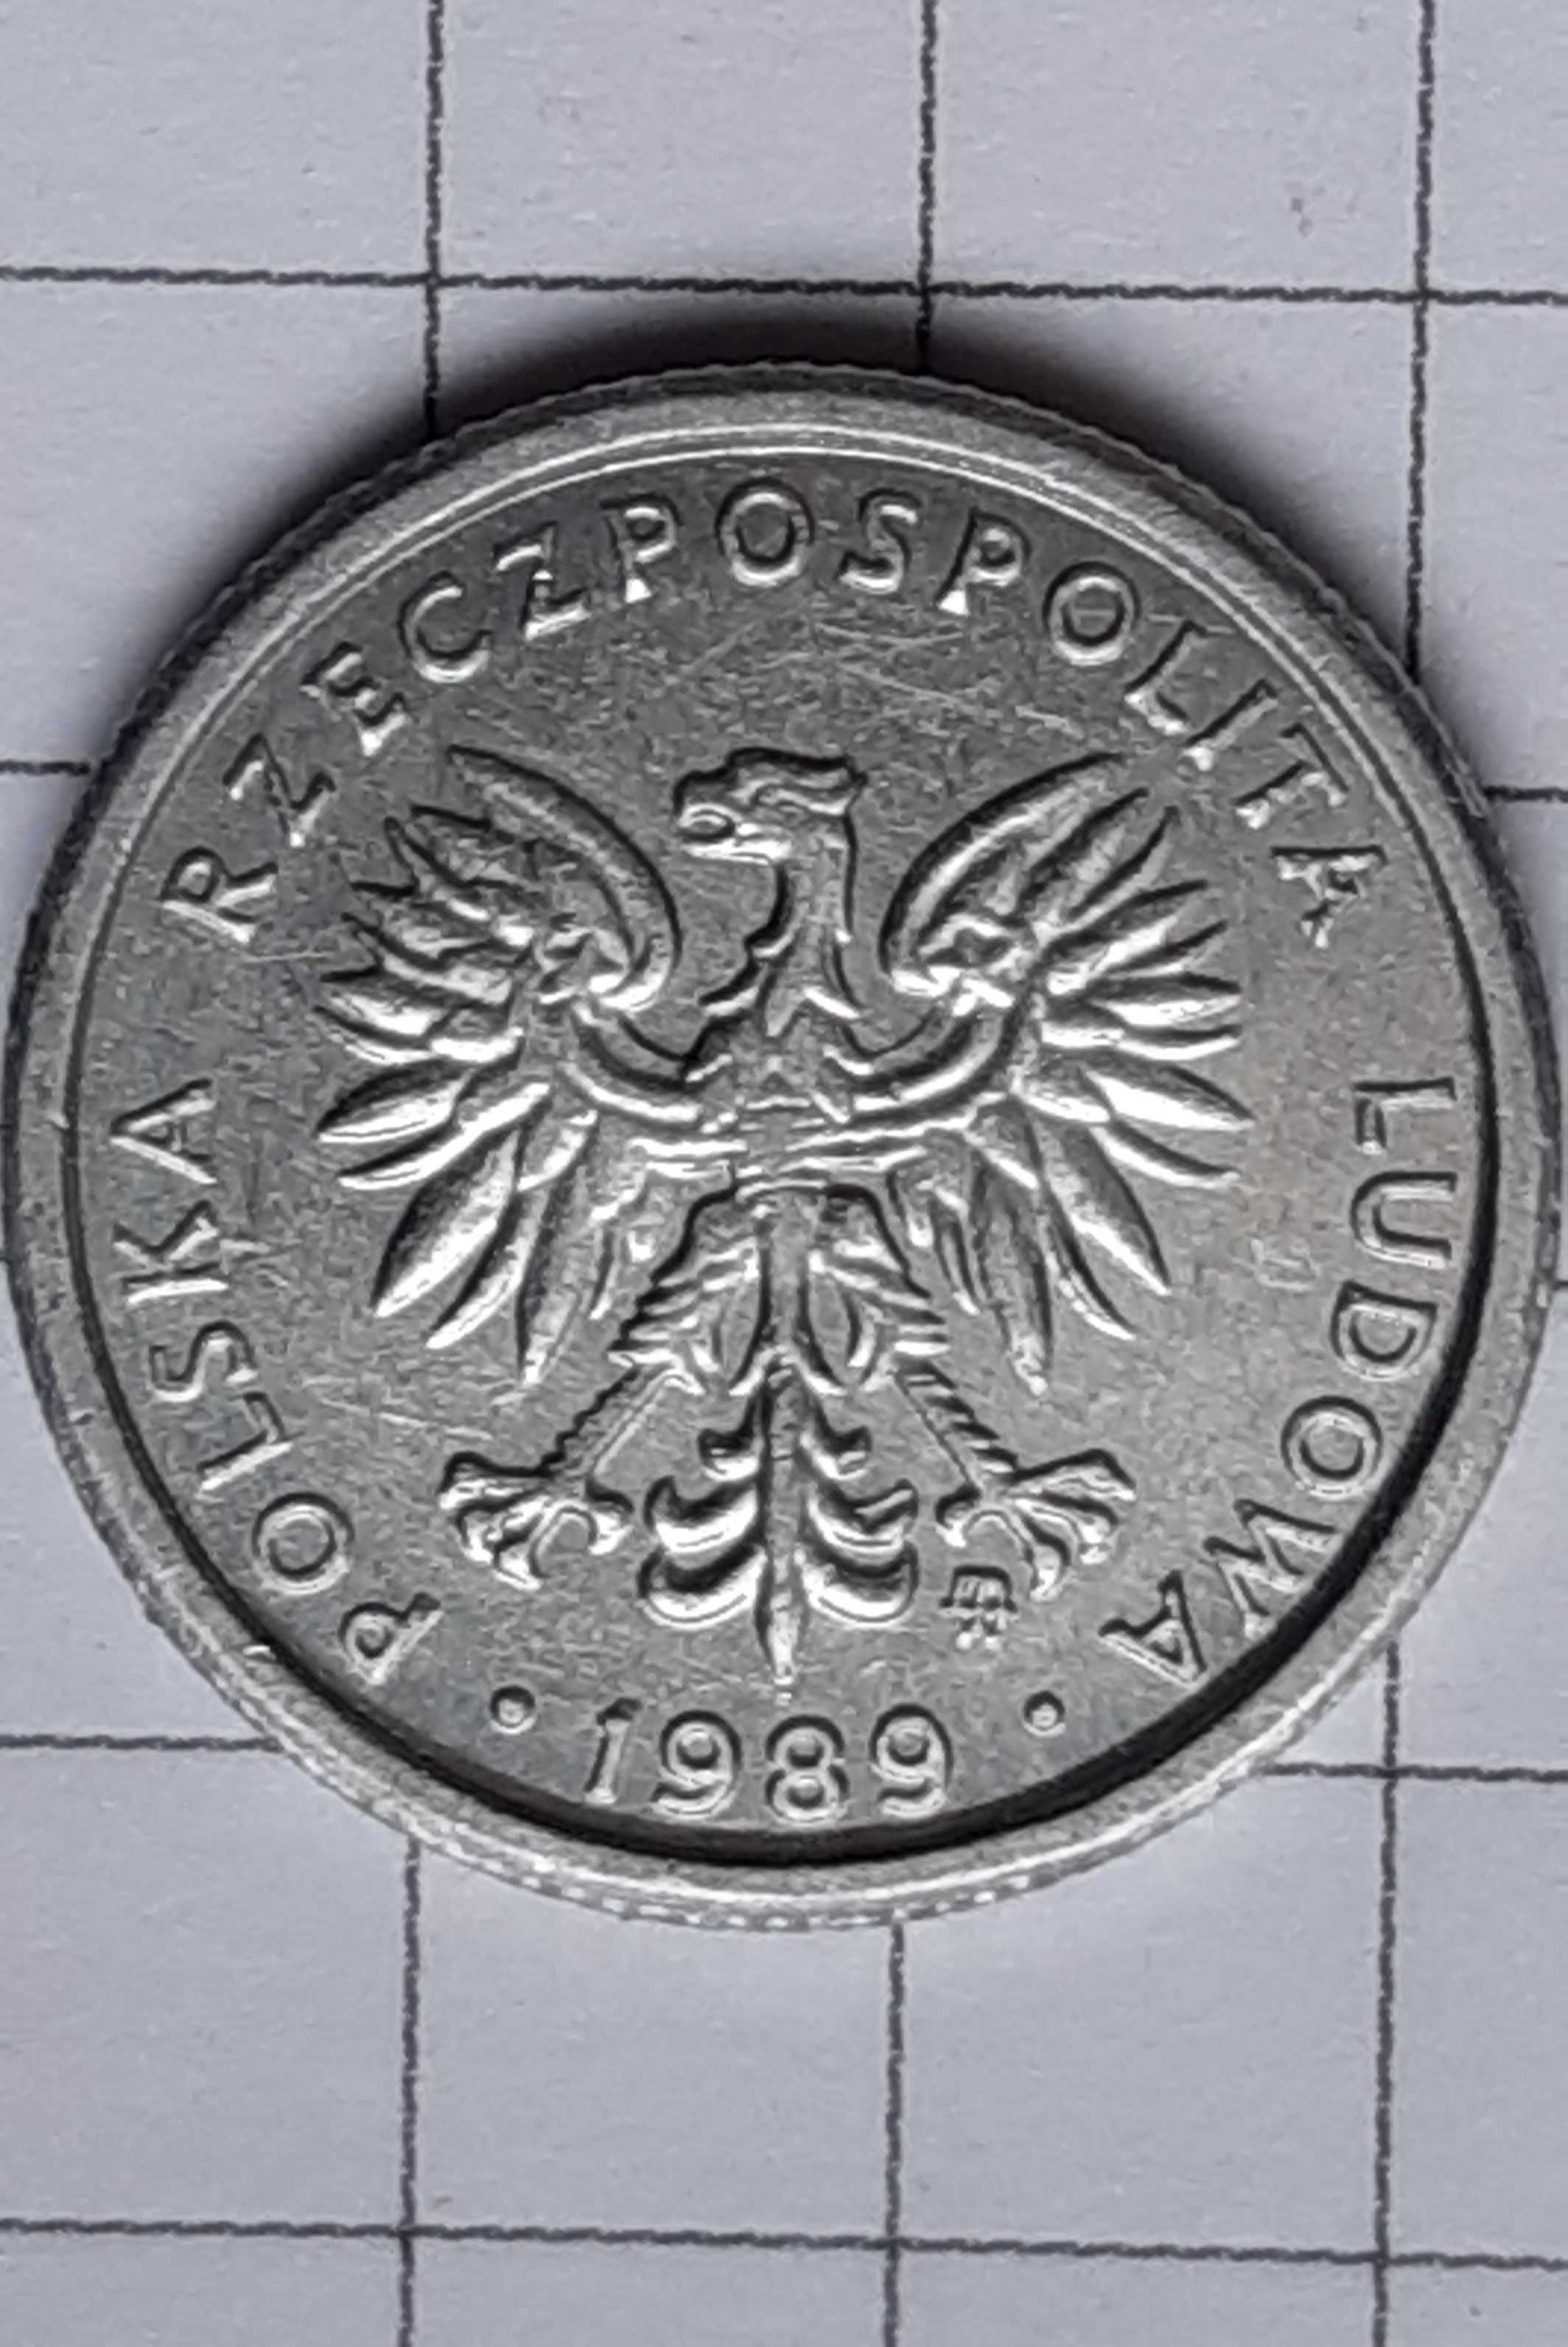 Moneta 1 zł z 1989 roku